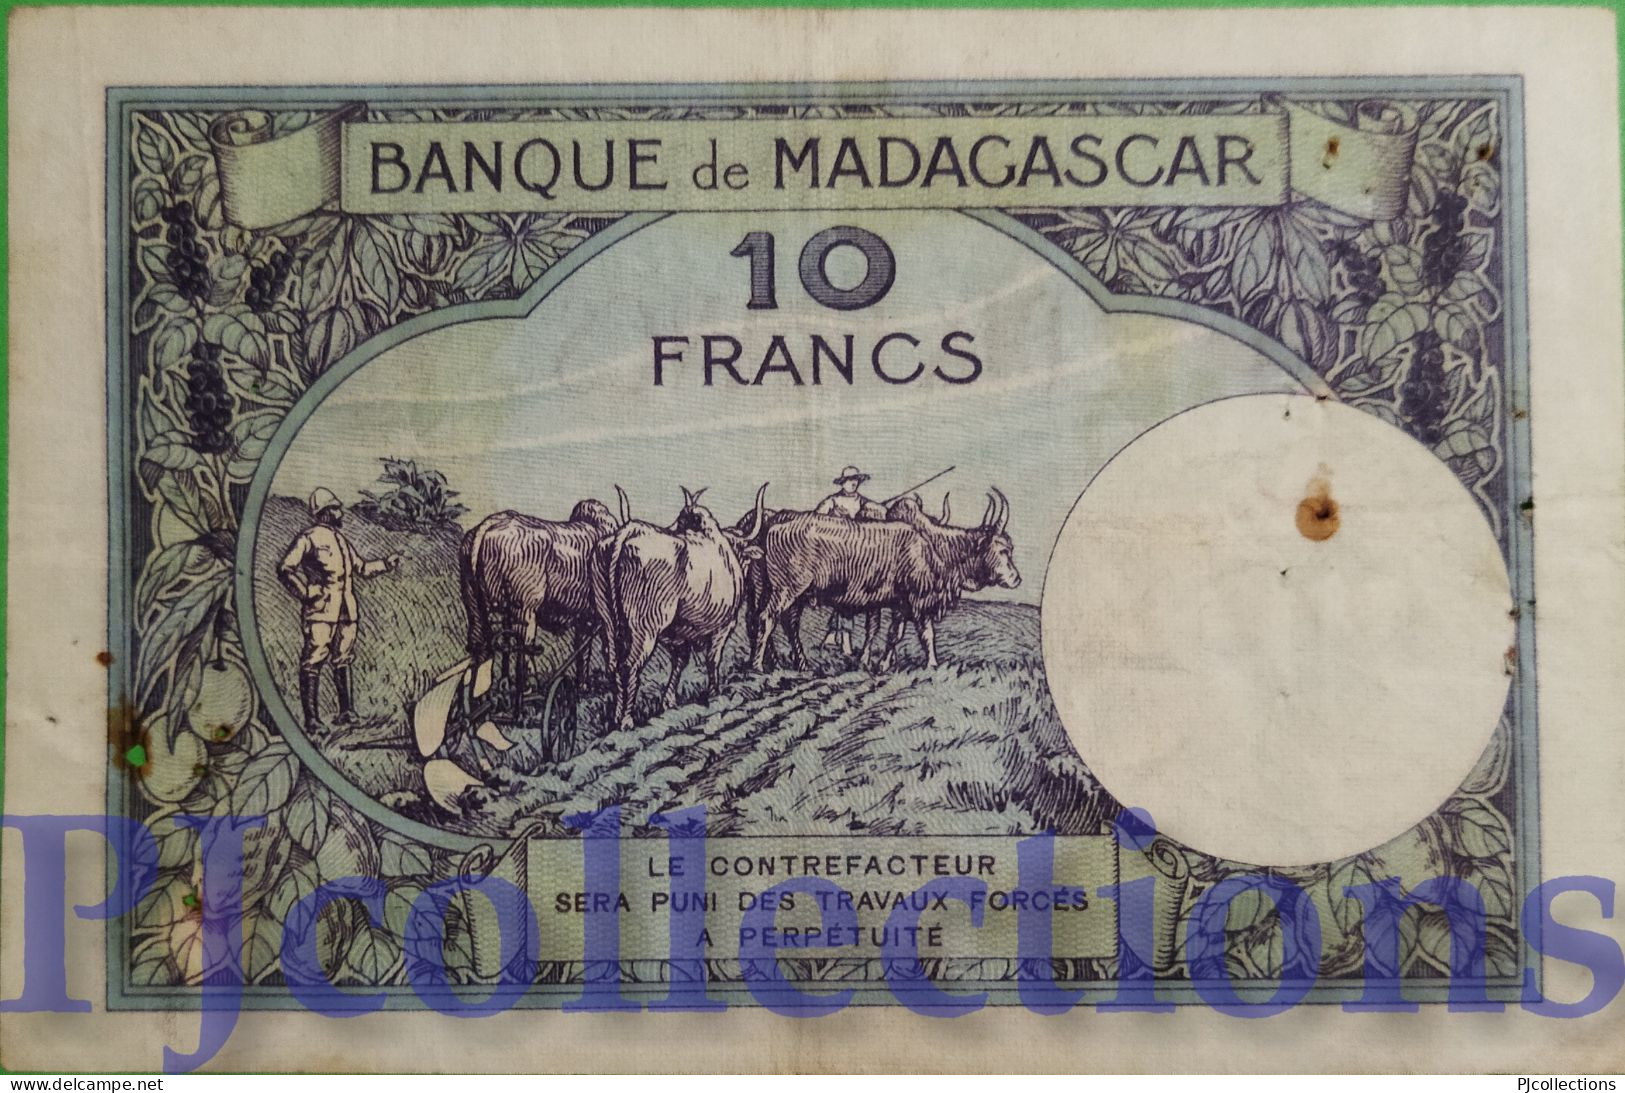 MADAGASCAR 10 FRANCS 1937/47 PICK 36 VF W/PIN HOLES - Madagascar